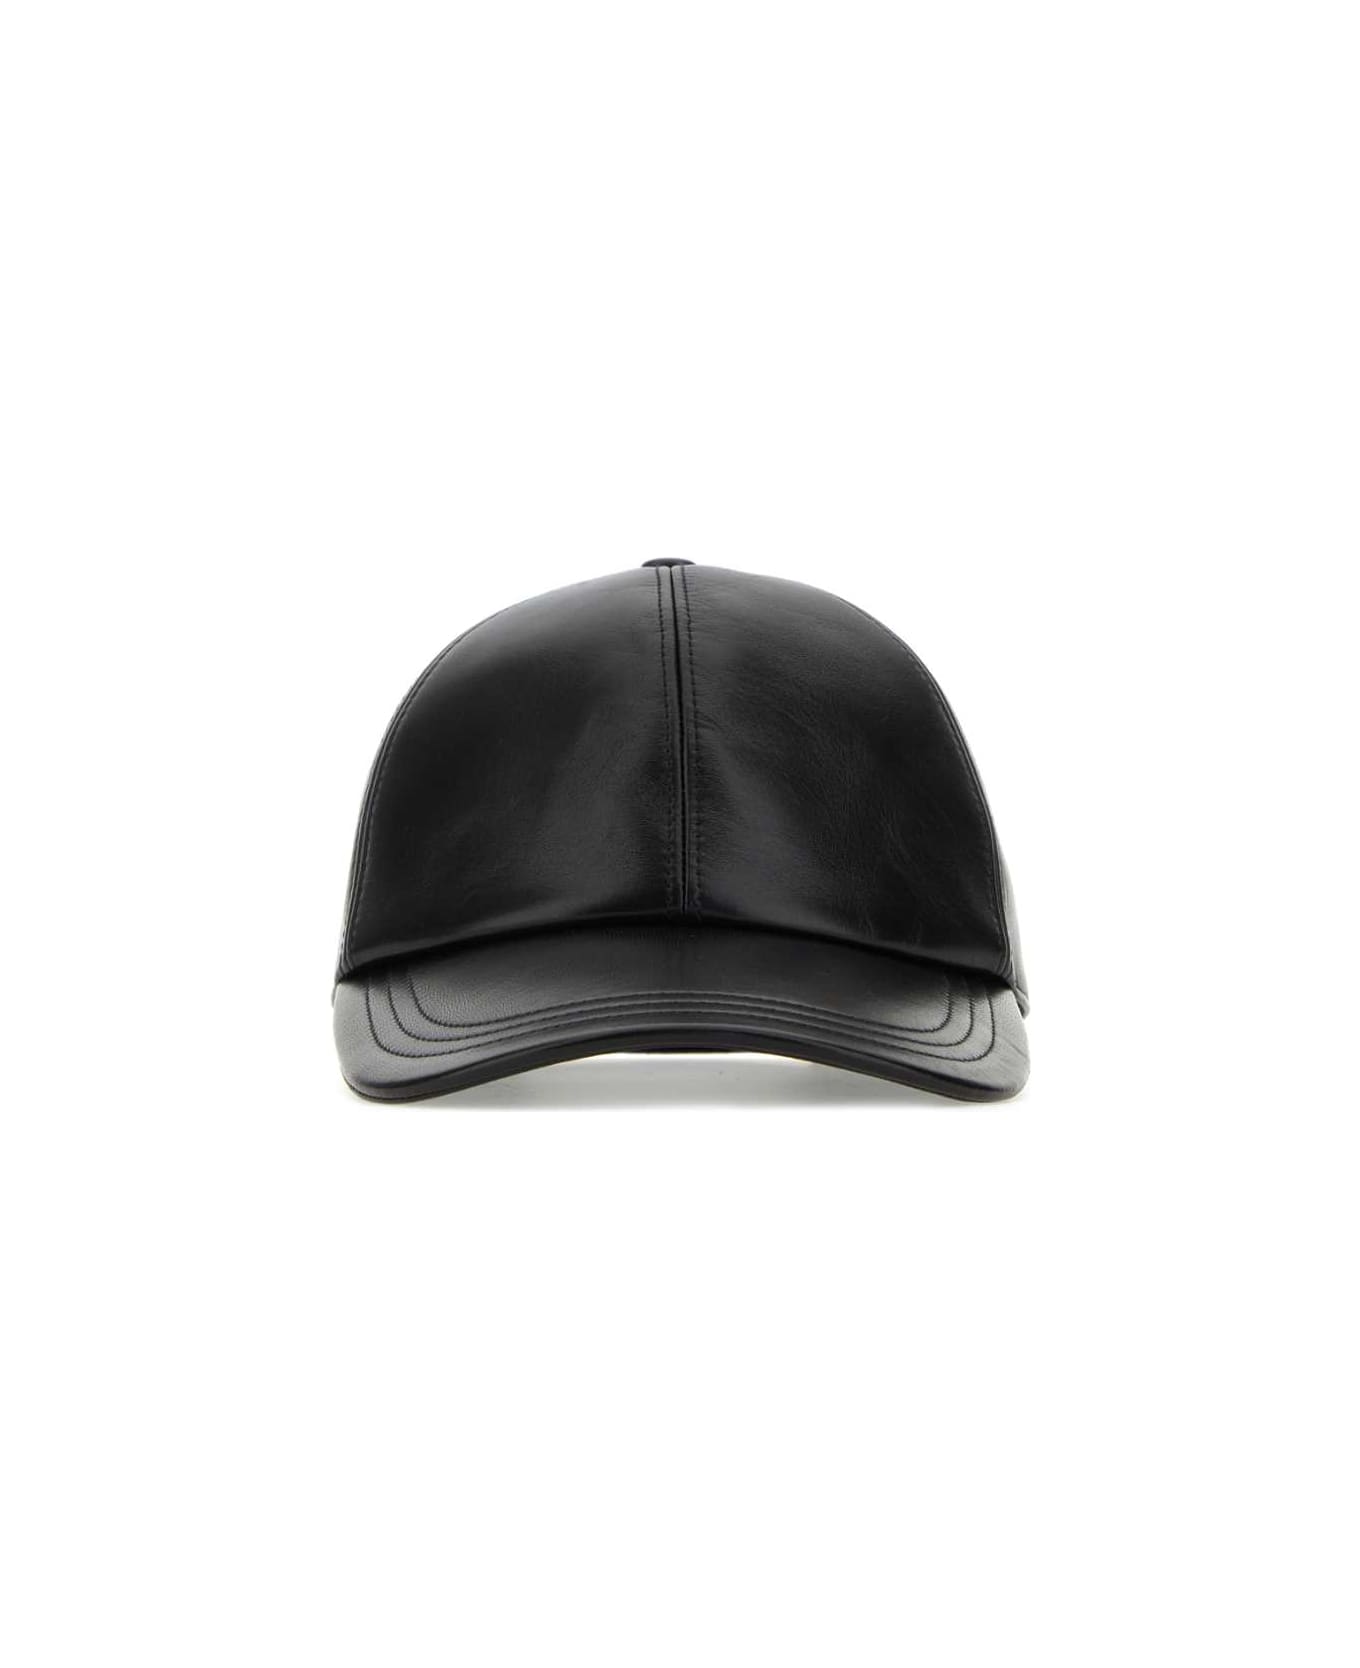 Prada Black Nappa Leather Baseball Cap - NERO